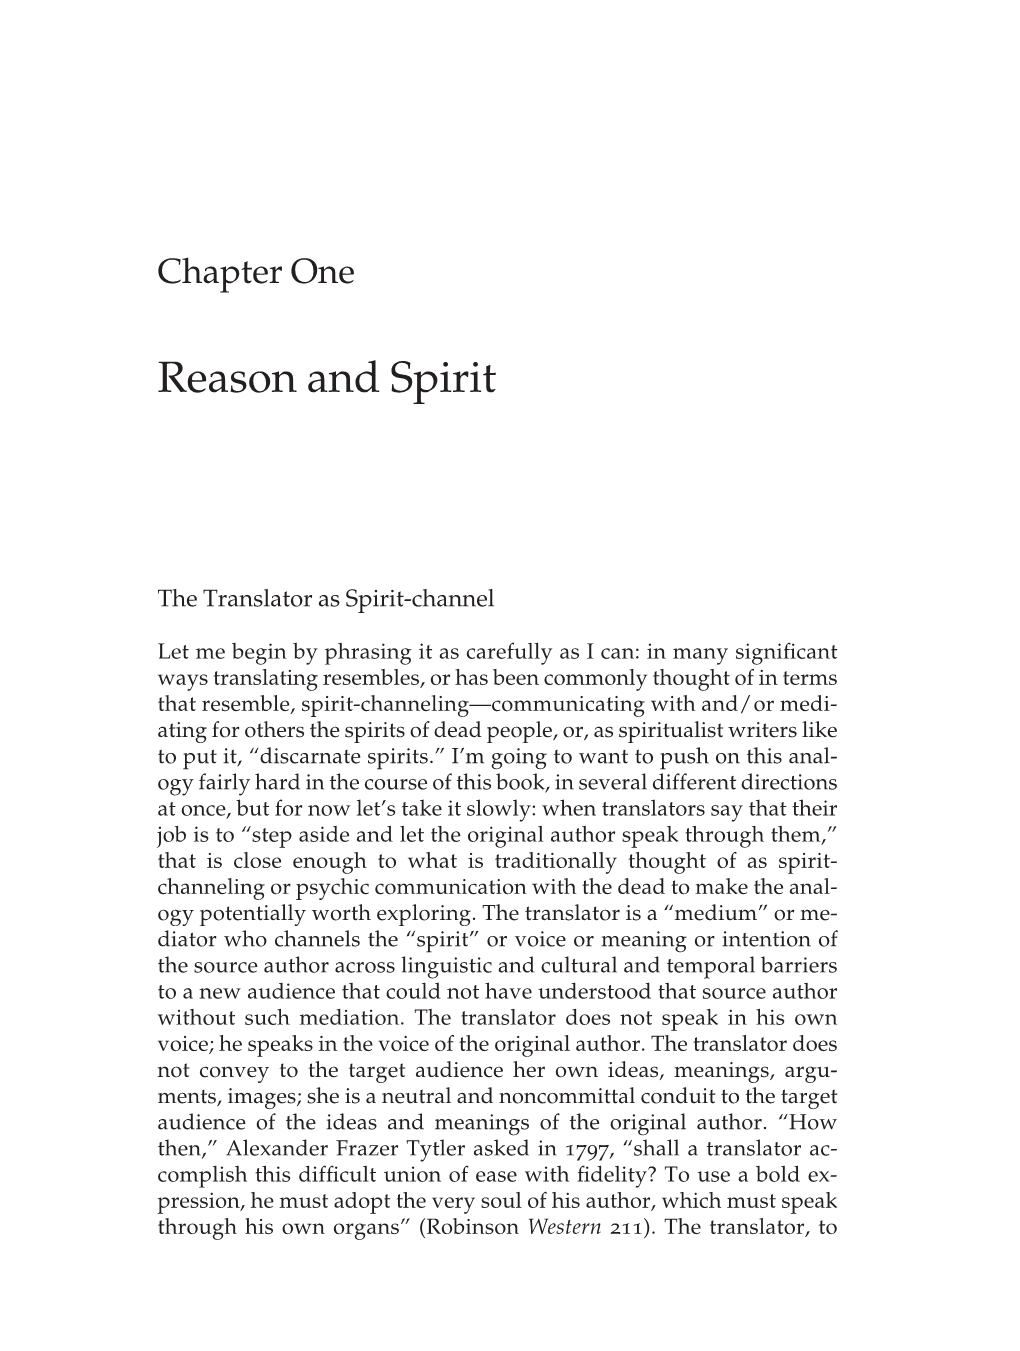 Reason and Spirit